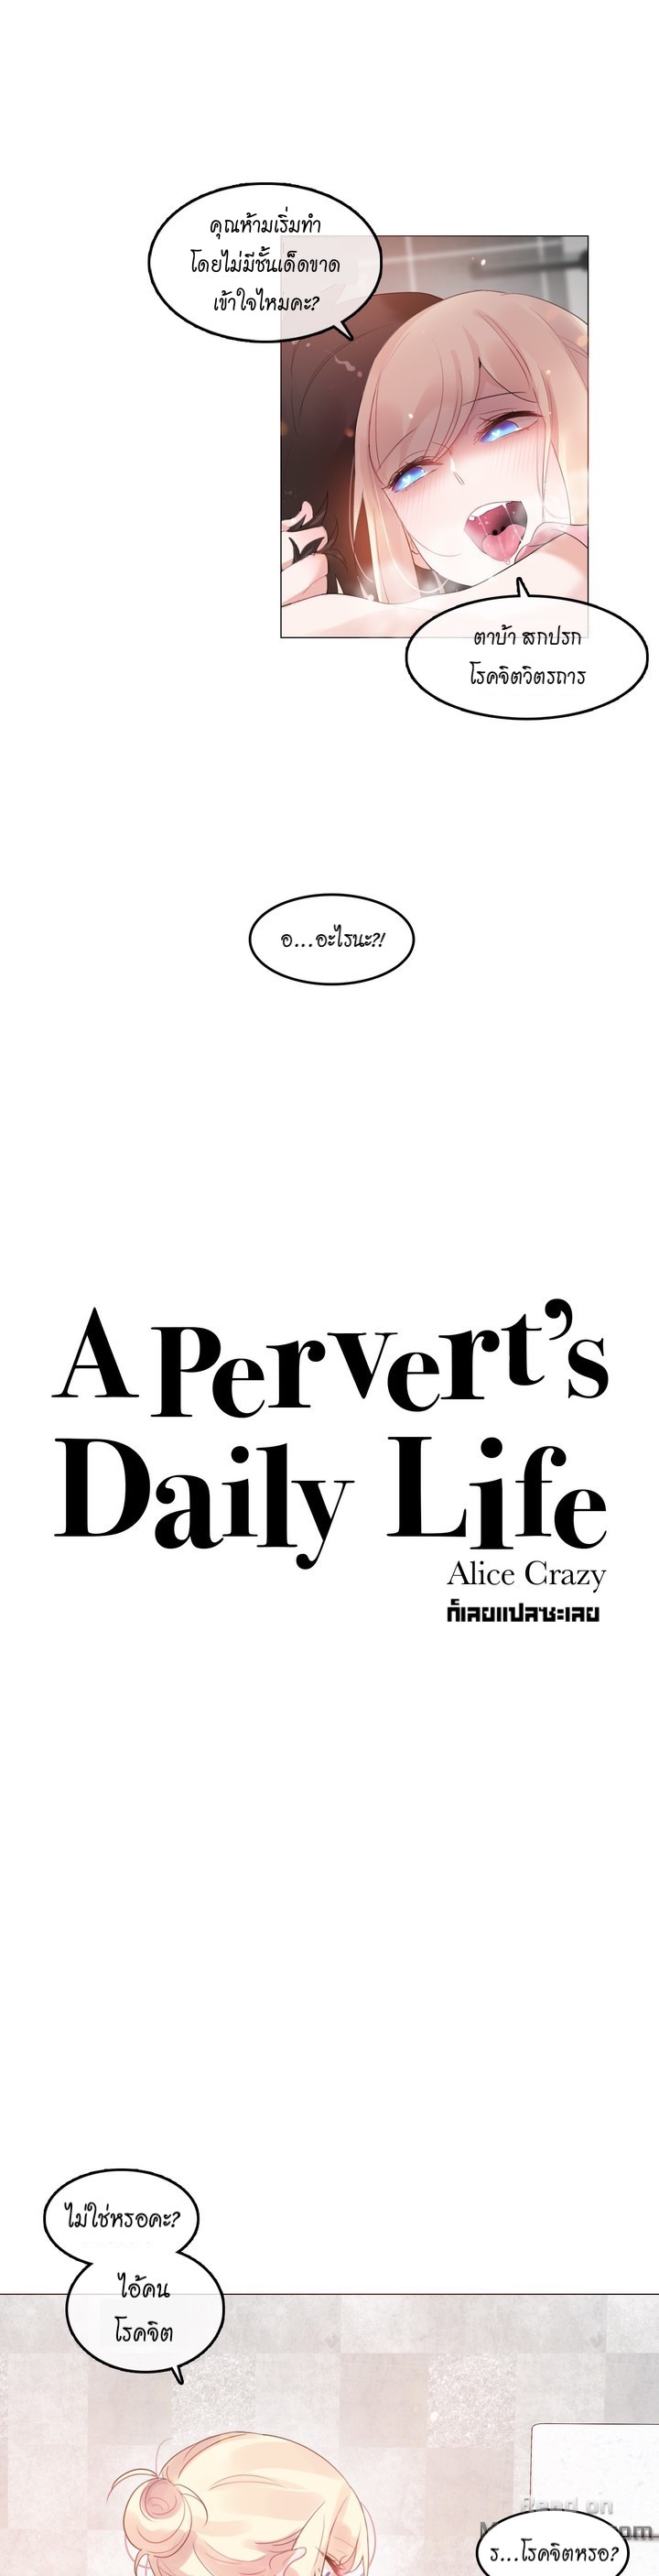 A Pervertâ€™s Daily Life 69 01